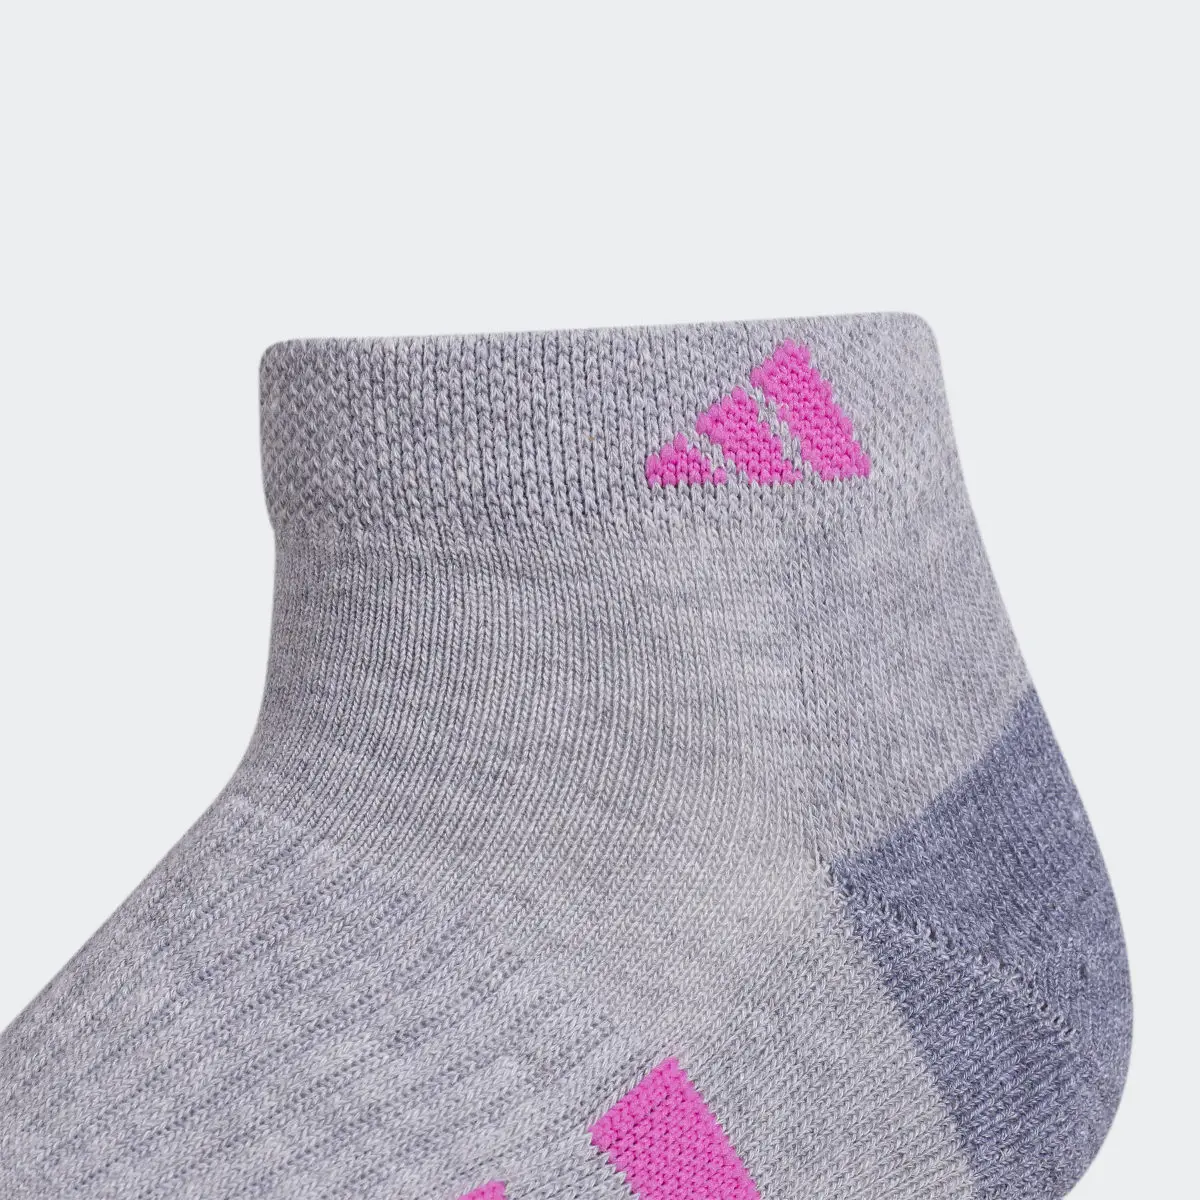 Adidas Cushioned Low-Cut Socks 3 Pairs. 3